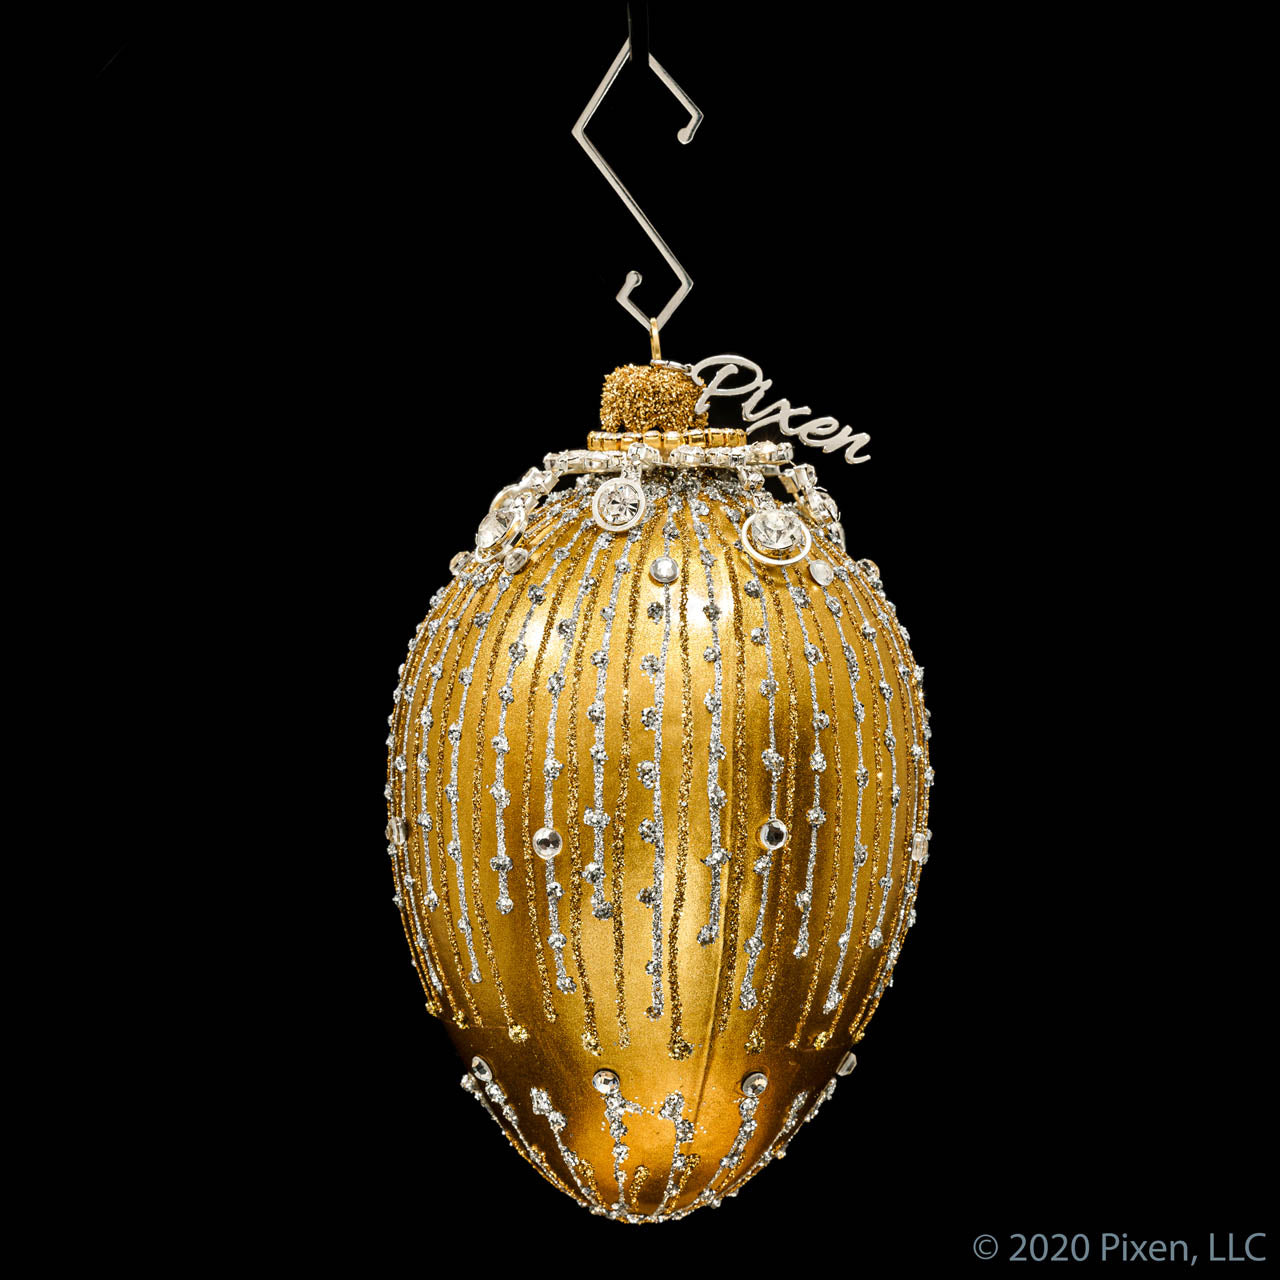 Rain Elegant Christmas Ornament in gold by Pixen